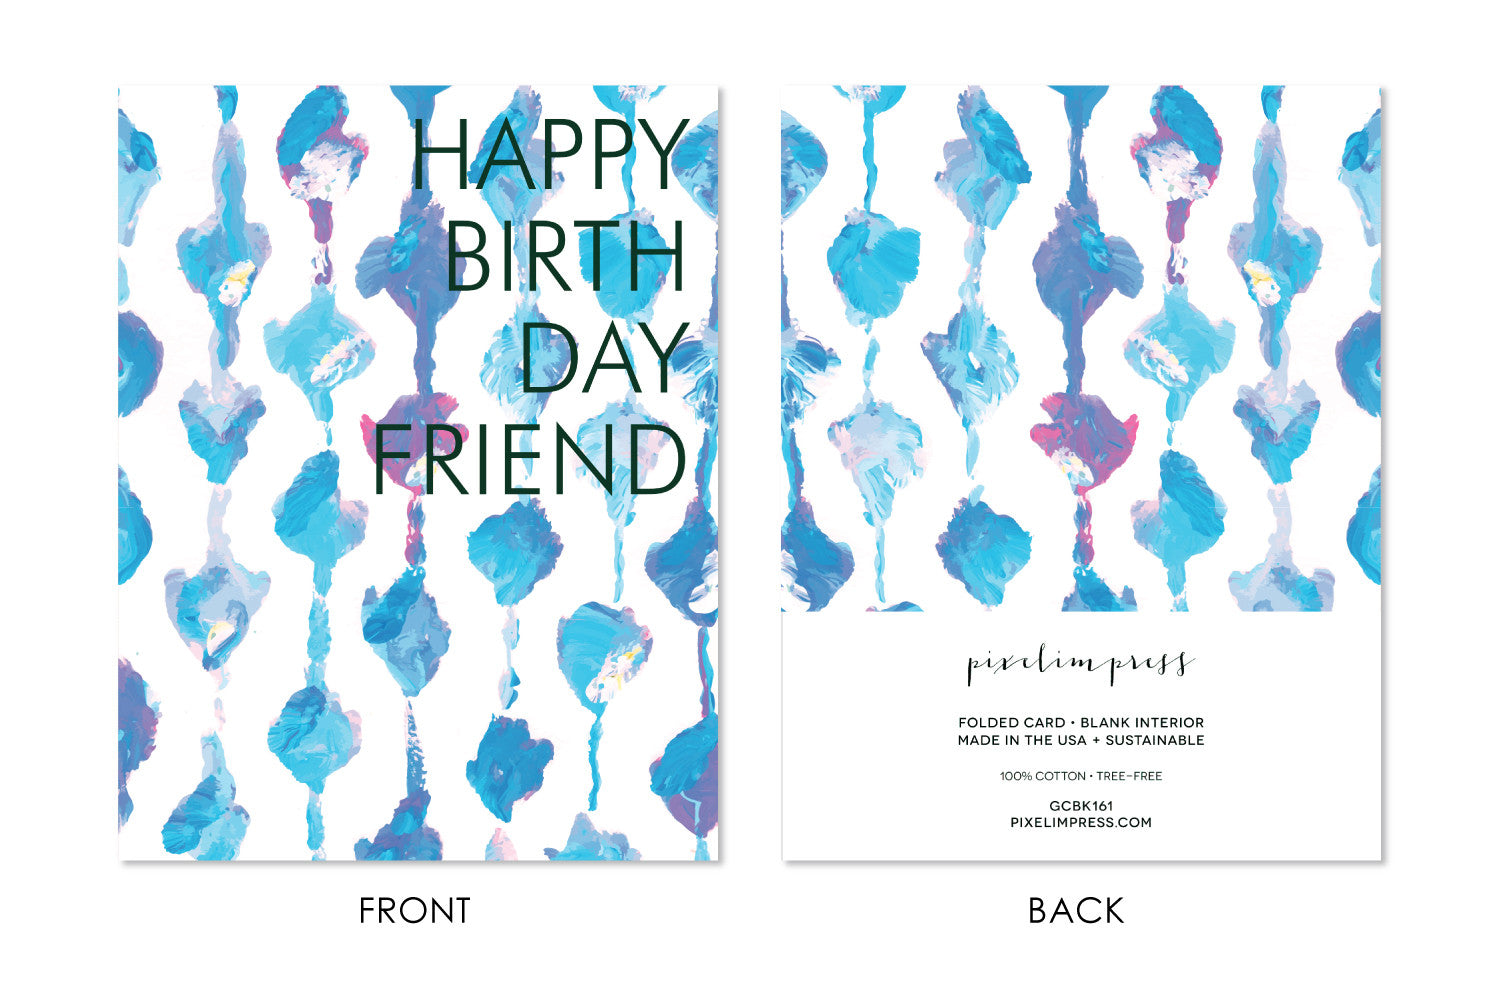 Aqua Knots Happy Birthday Friday Greeting Card by pixelimpress